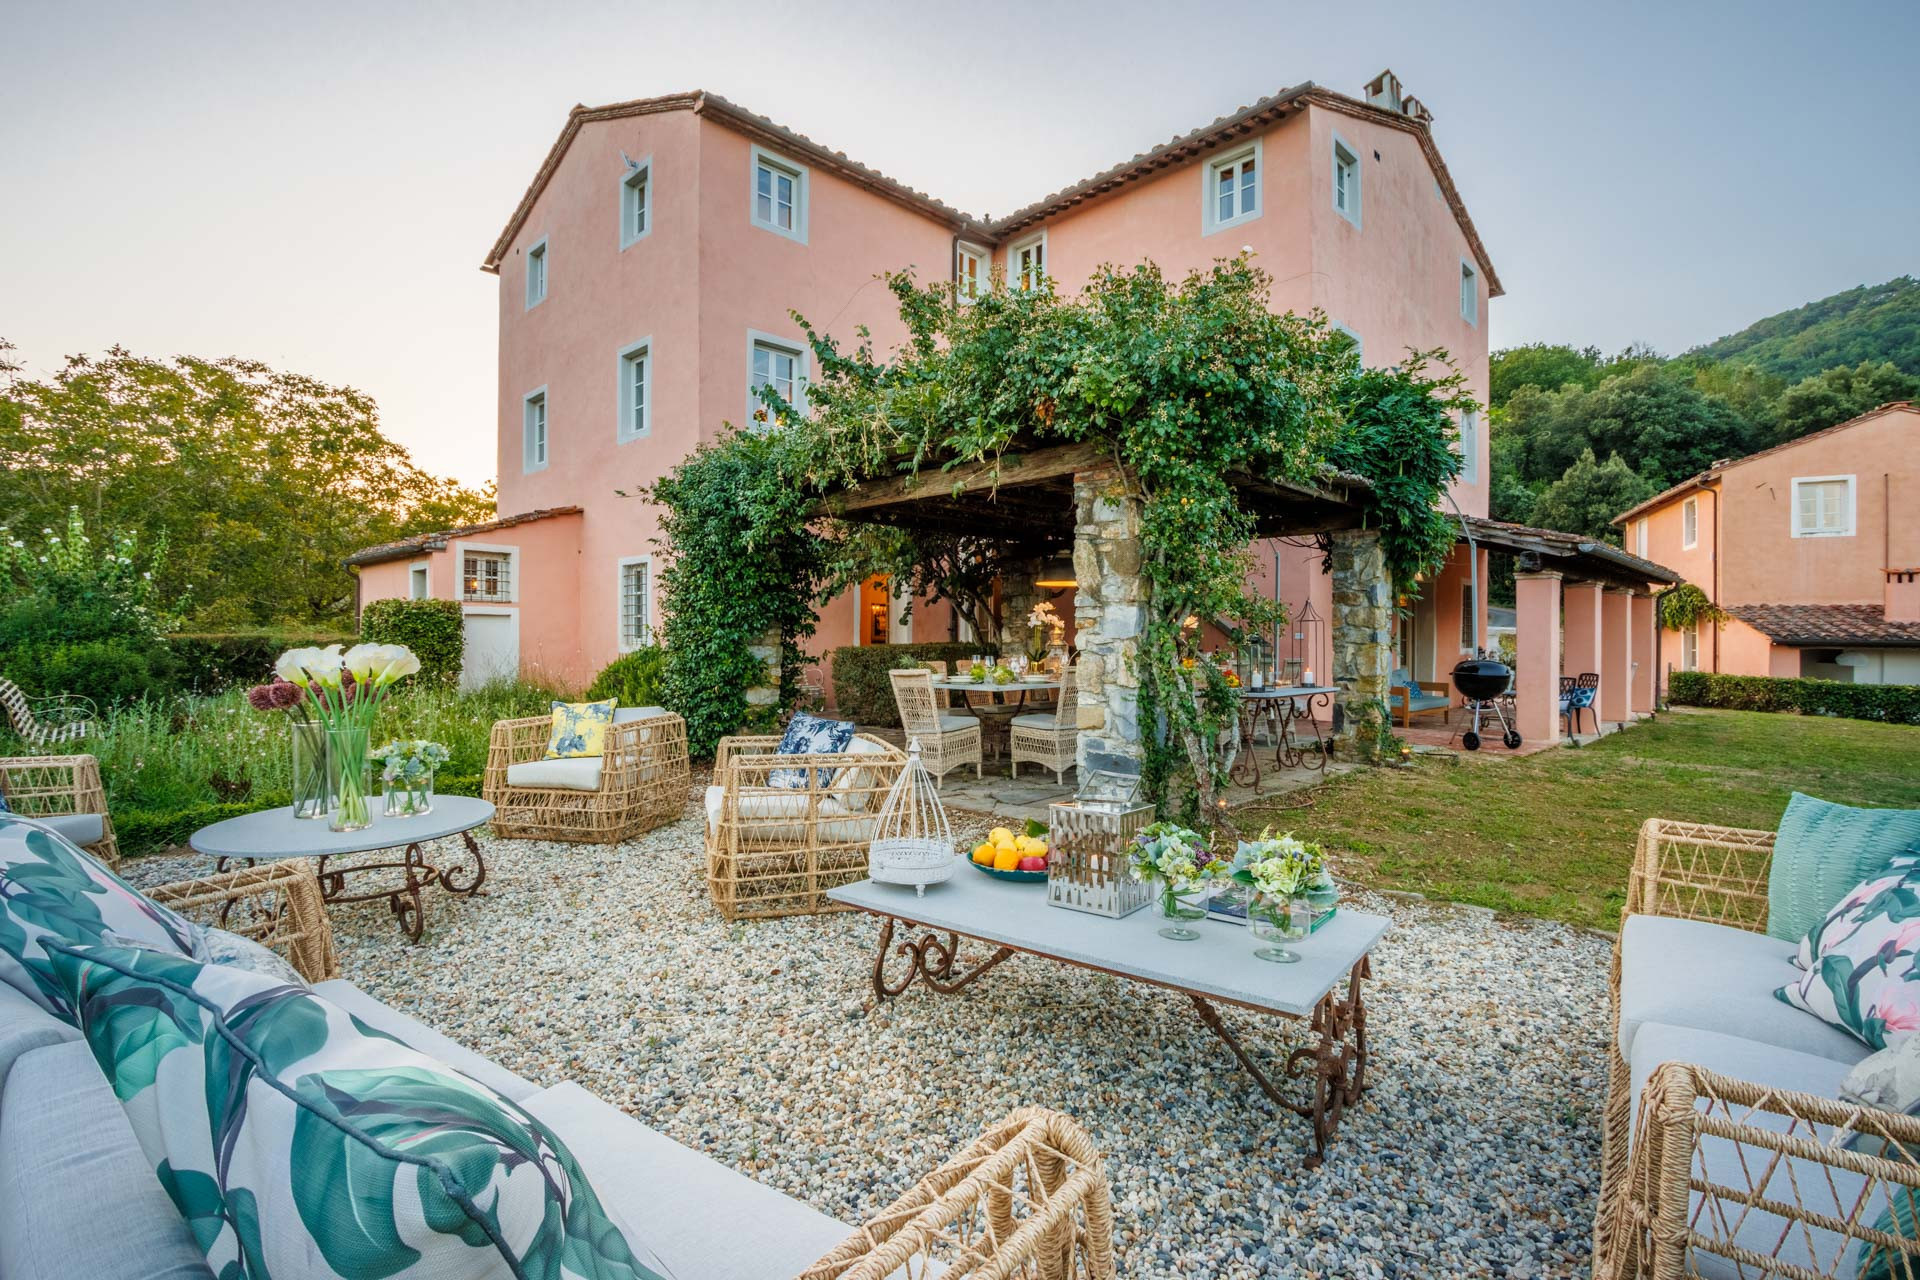 Villa/Dettached house in Lucca - Villa Francigena, a Luxury 10 bedroom Farmhouse Villa